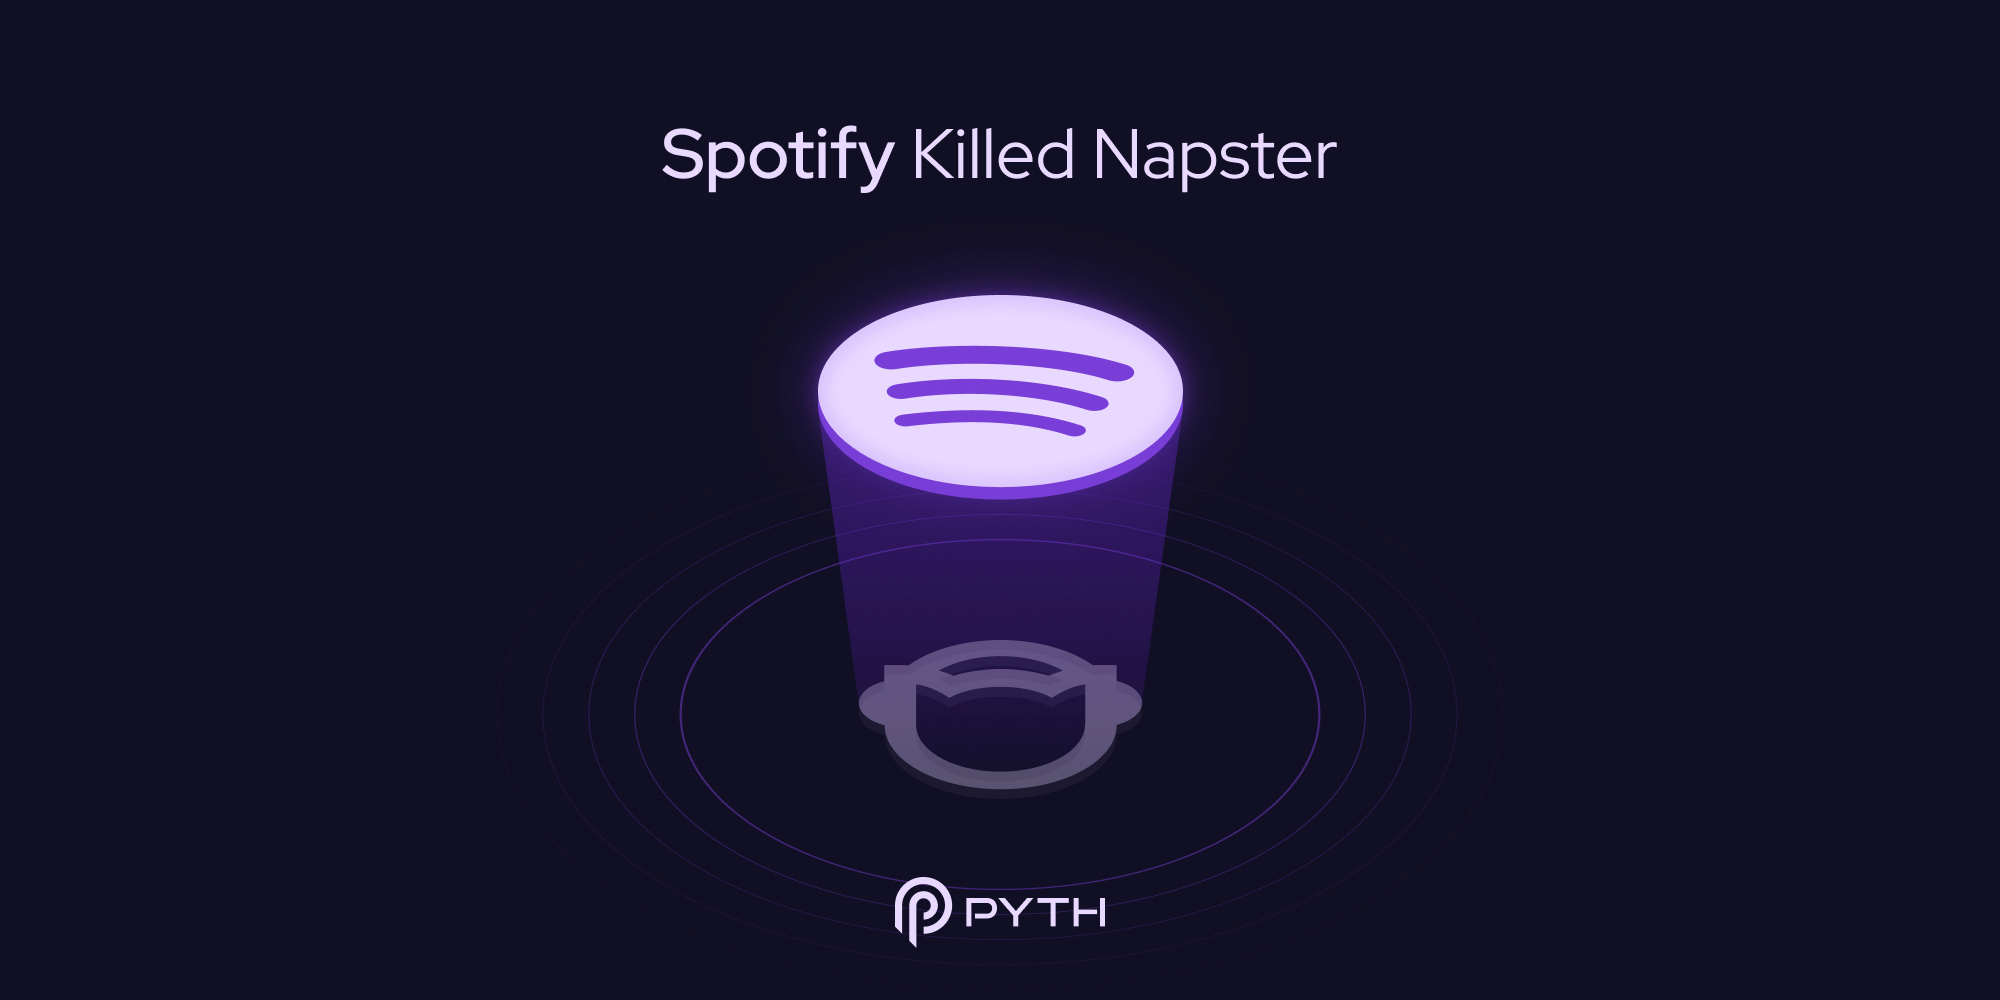 Pyth Network: The Spotify of Crypto